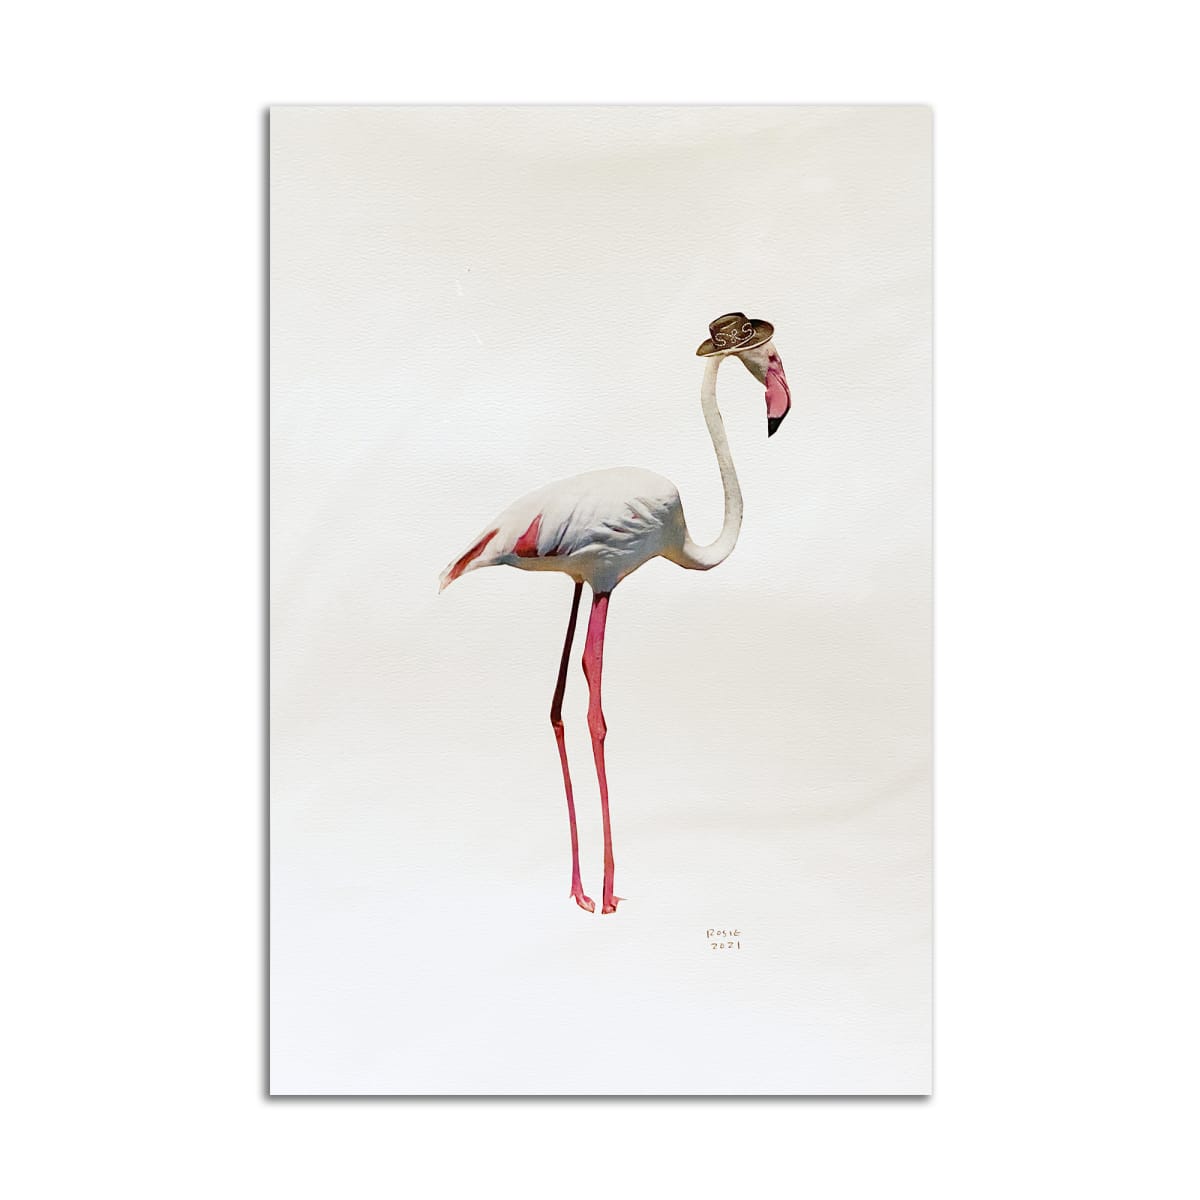 Flamingo in Cowboy Hat by Rosie Winstead 